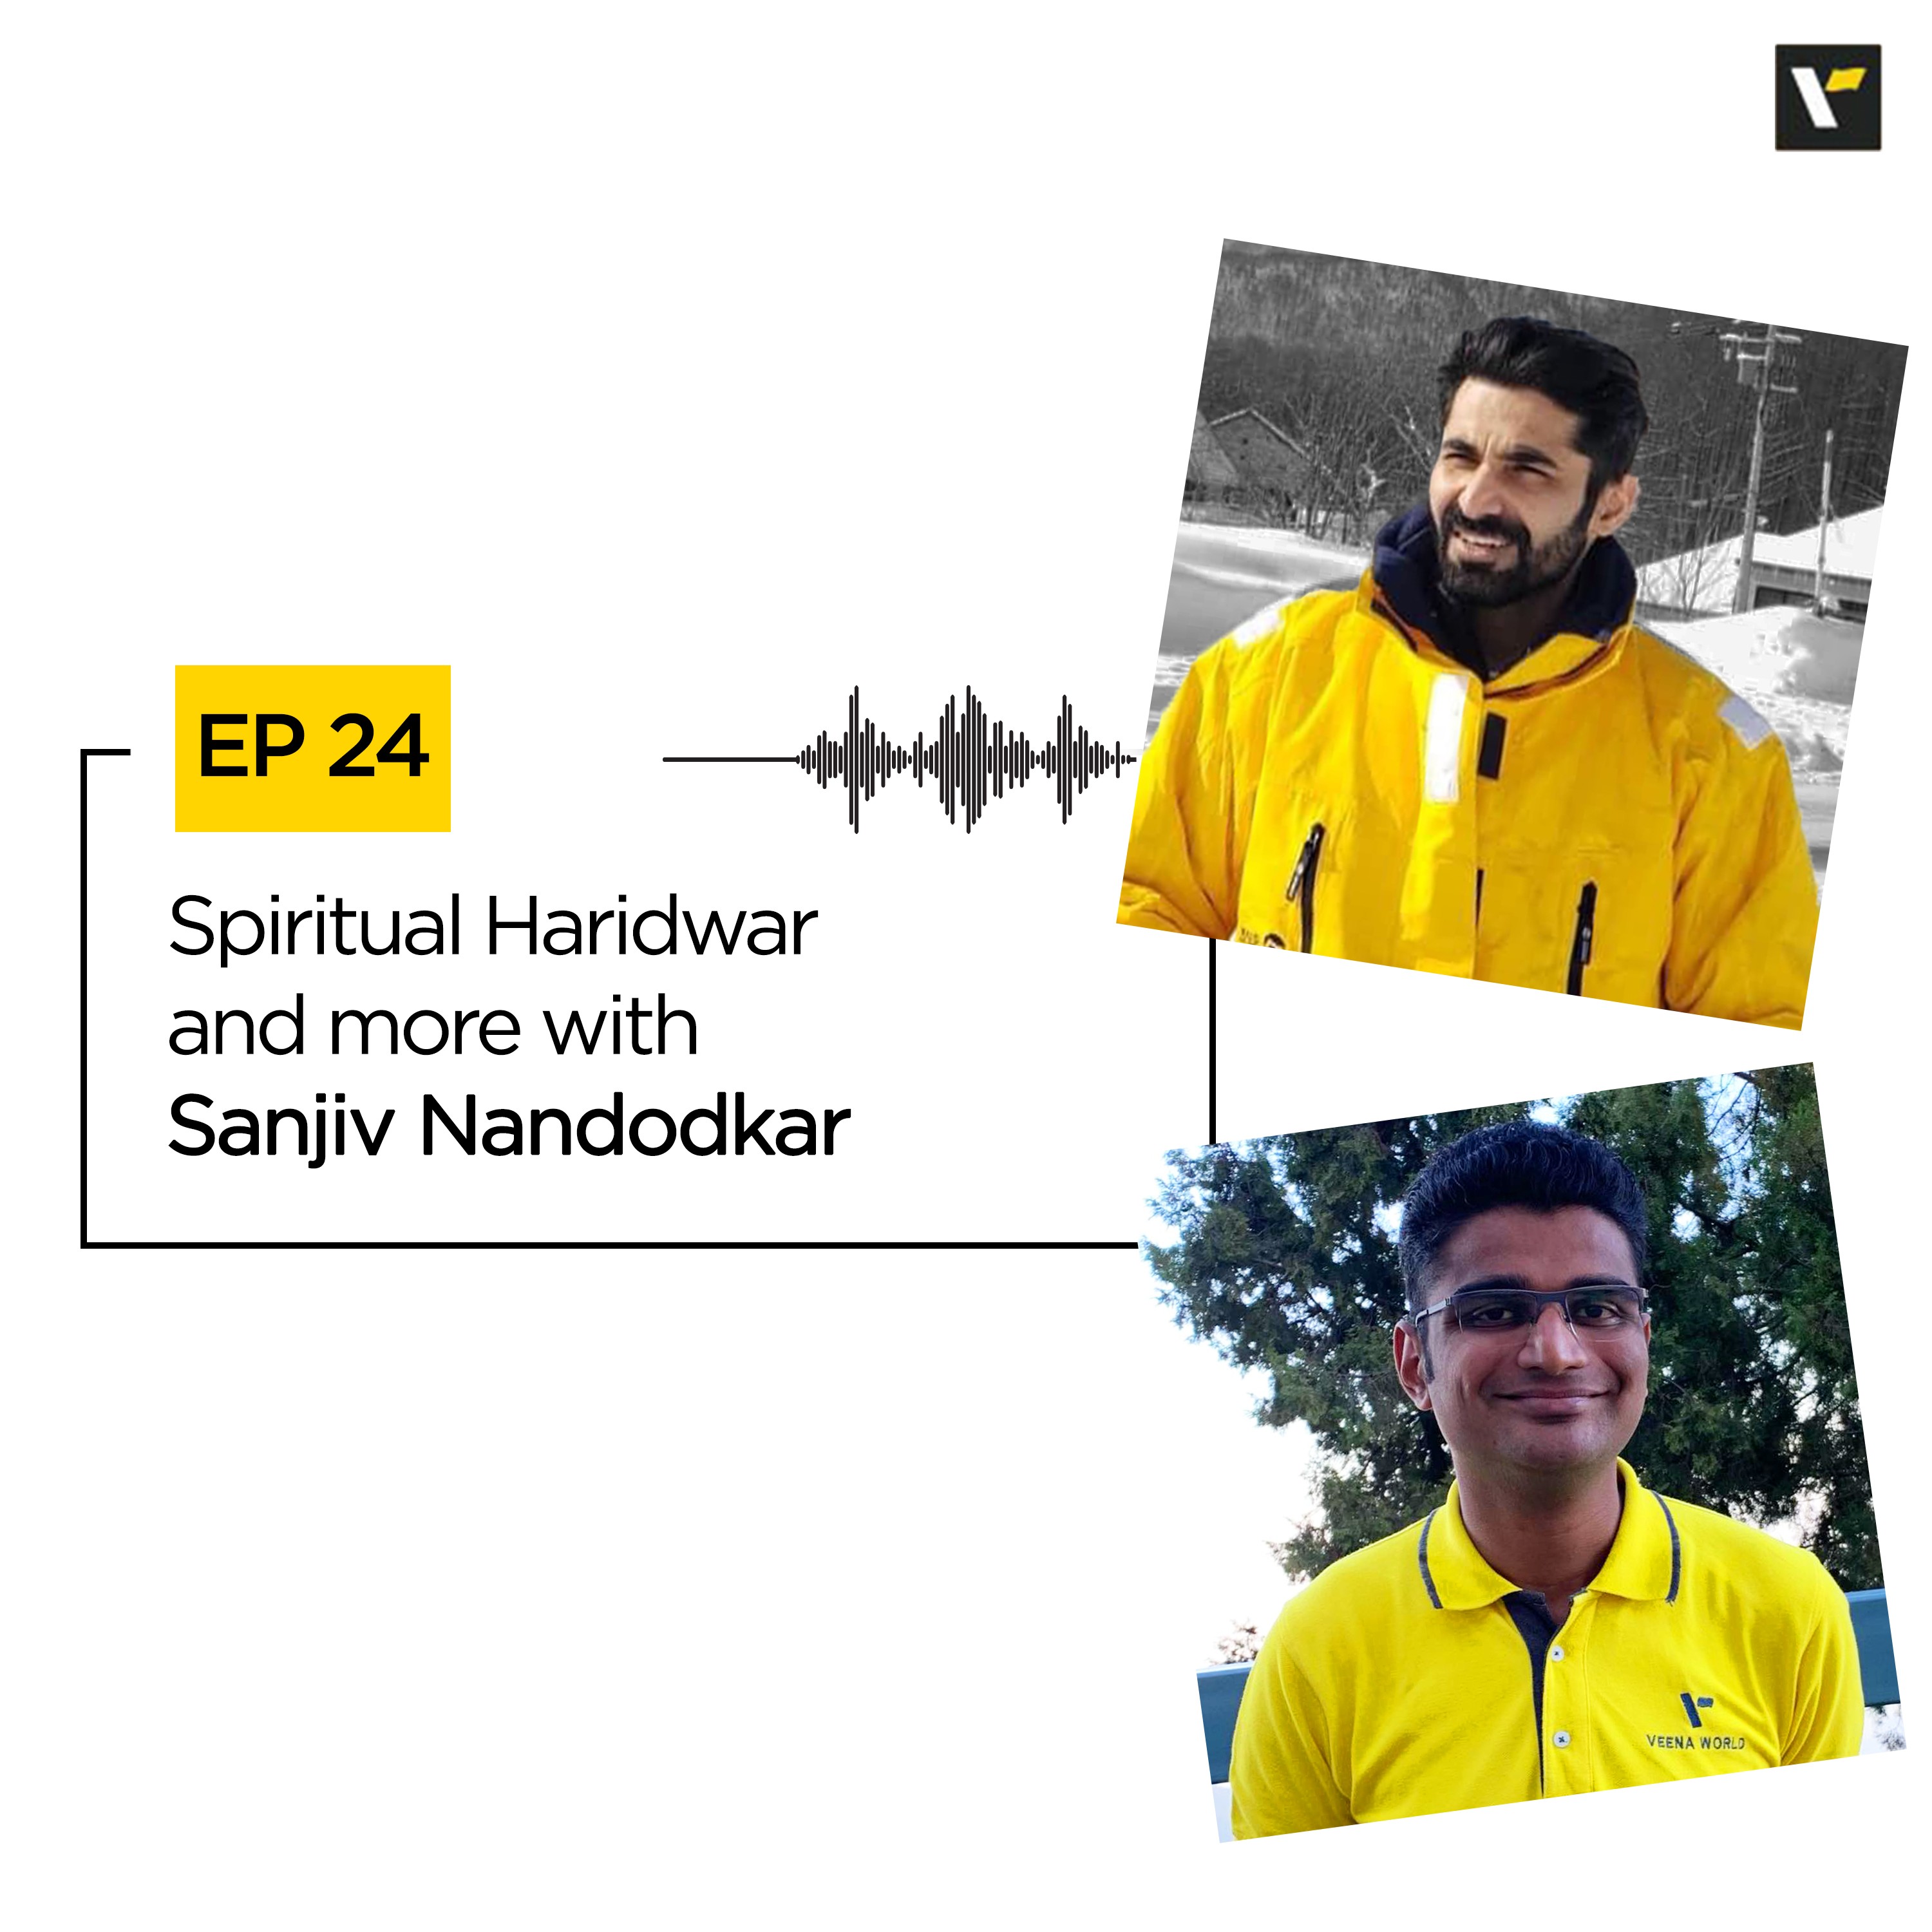 Ep 24 Spiritual Haridwar and more with Sanjiv Nandodkar